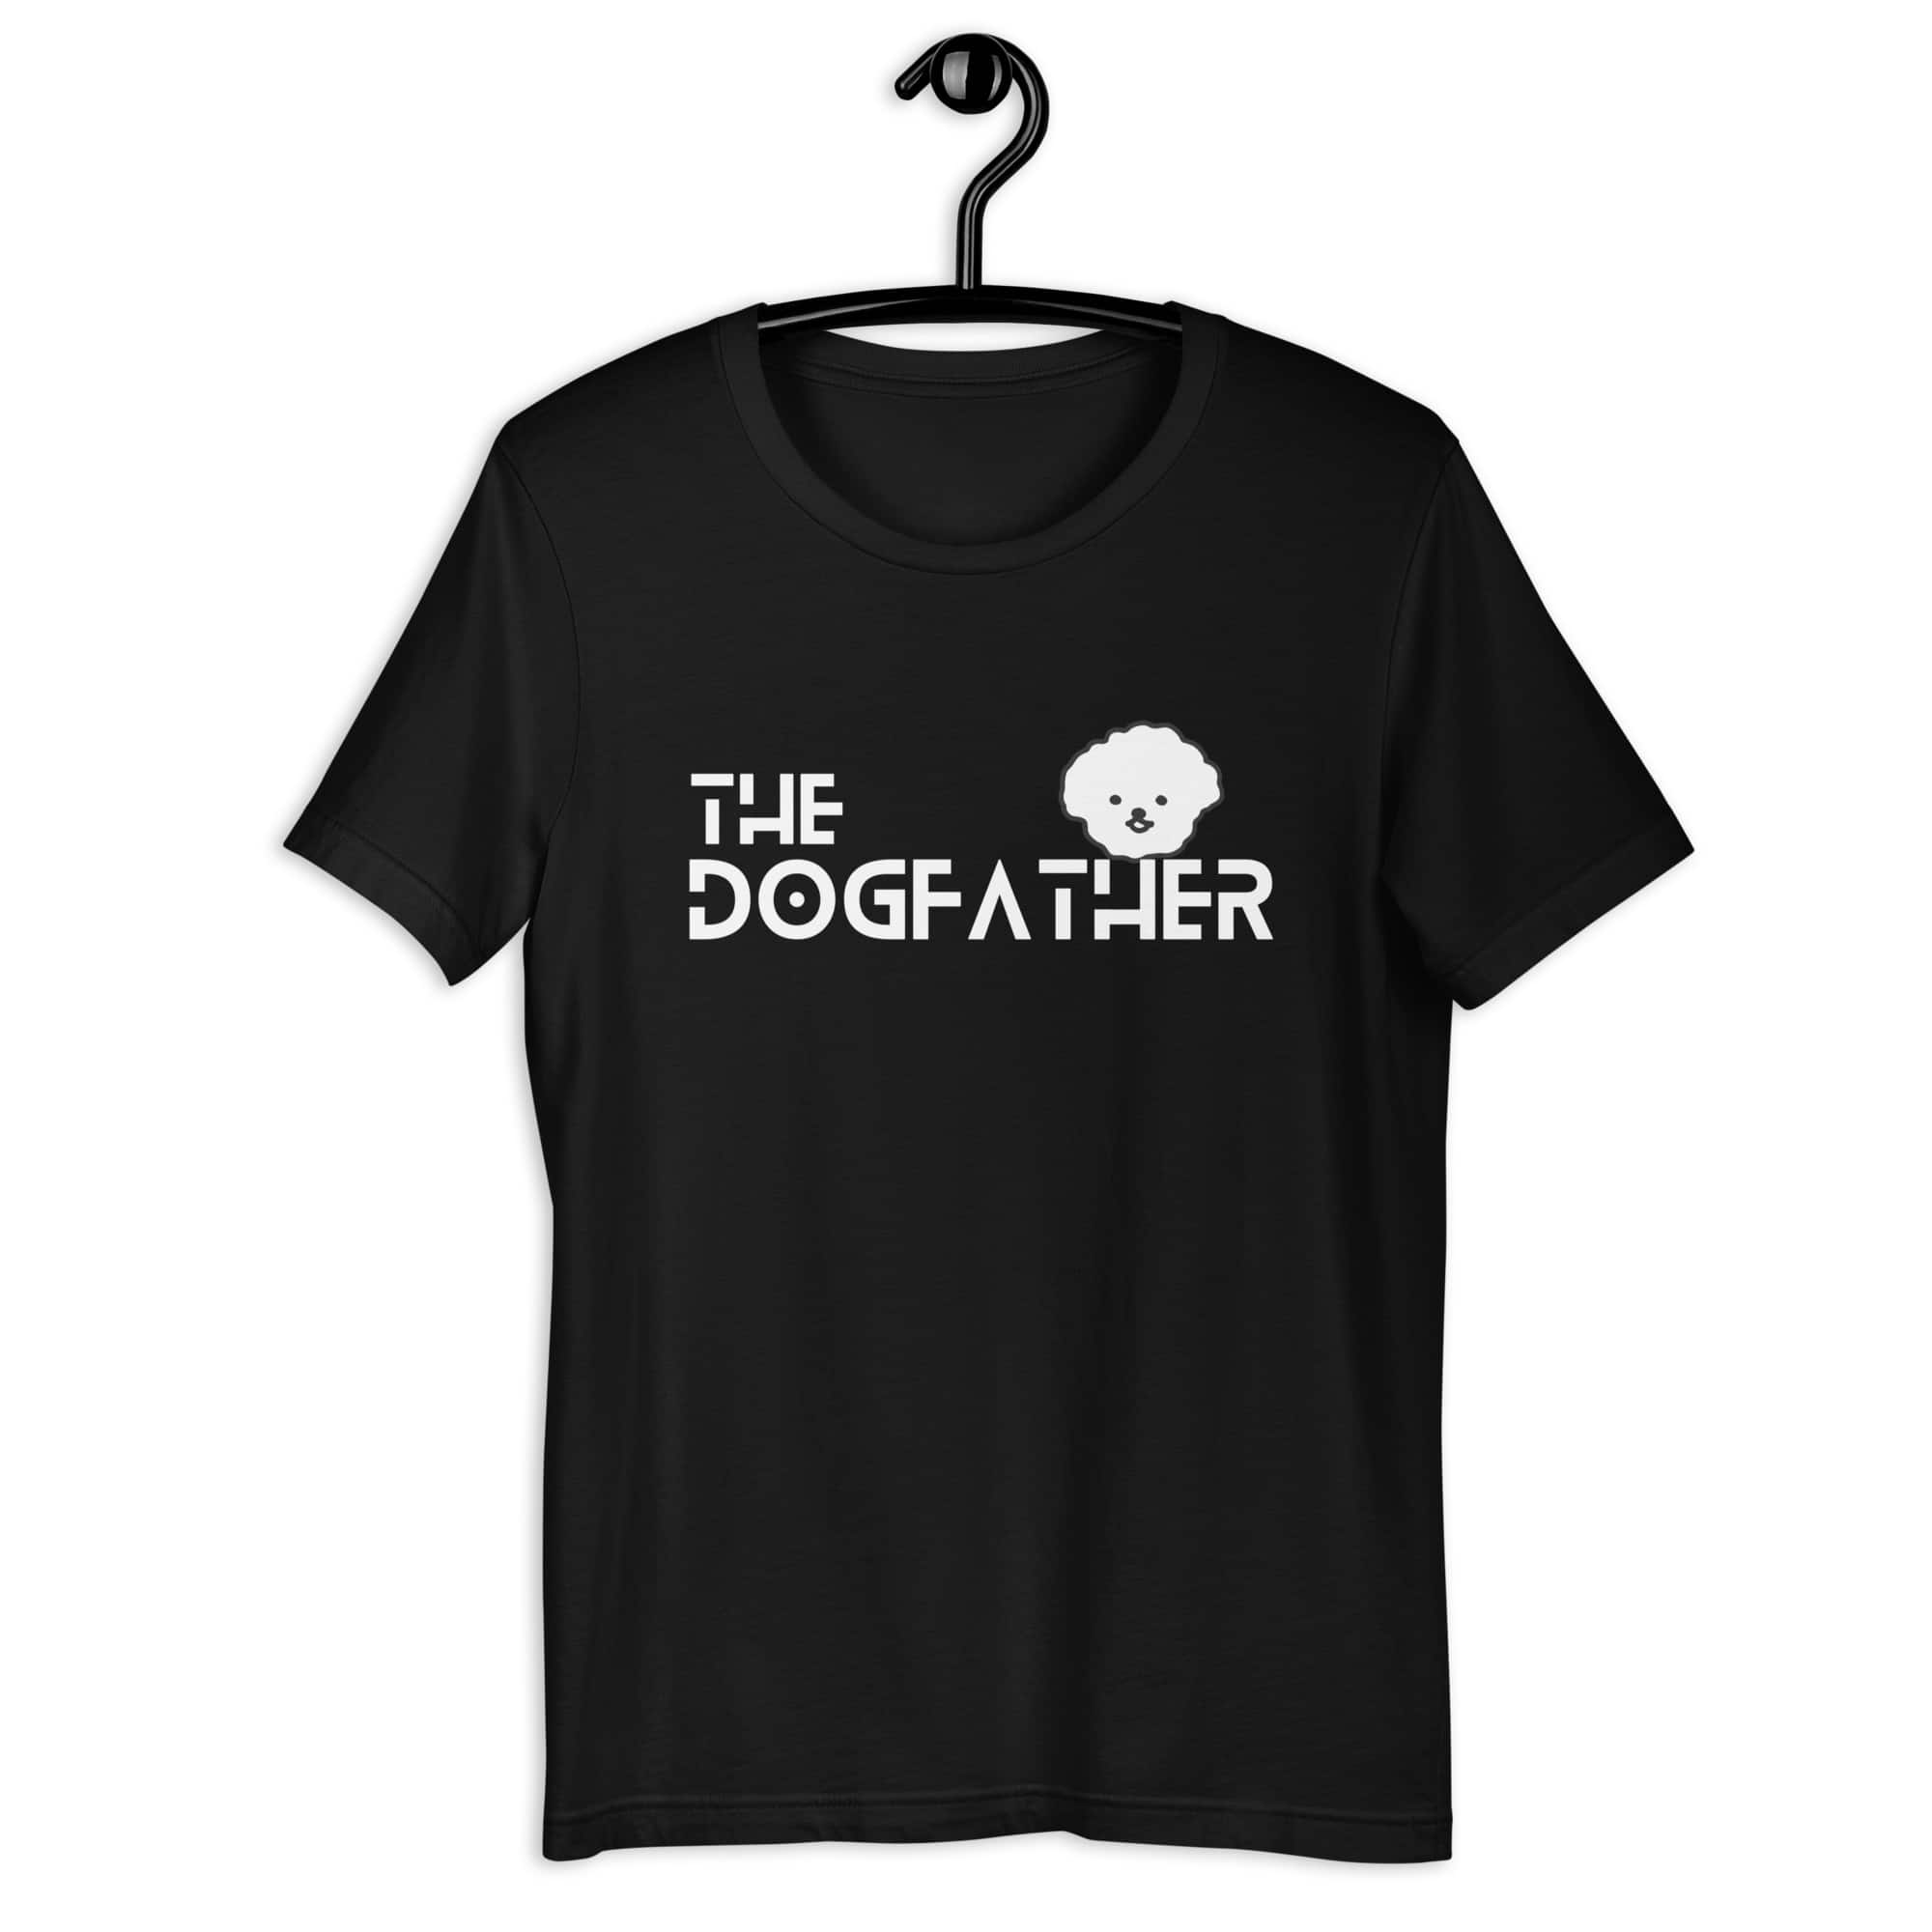 The Dogfather Poodles Unisex T-Shirt. Black